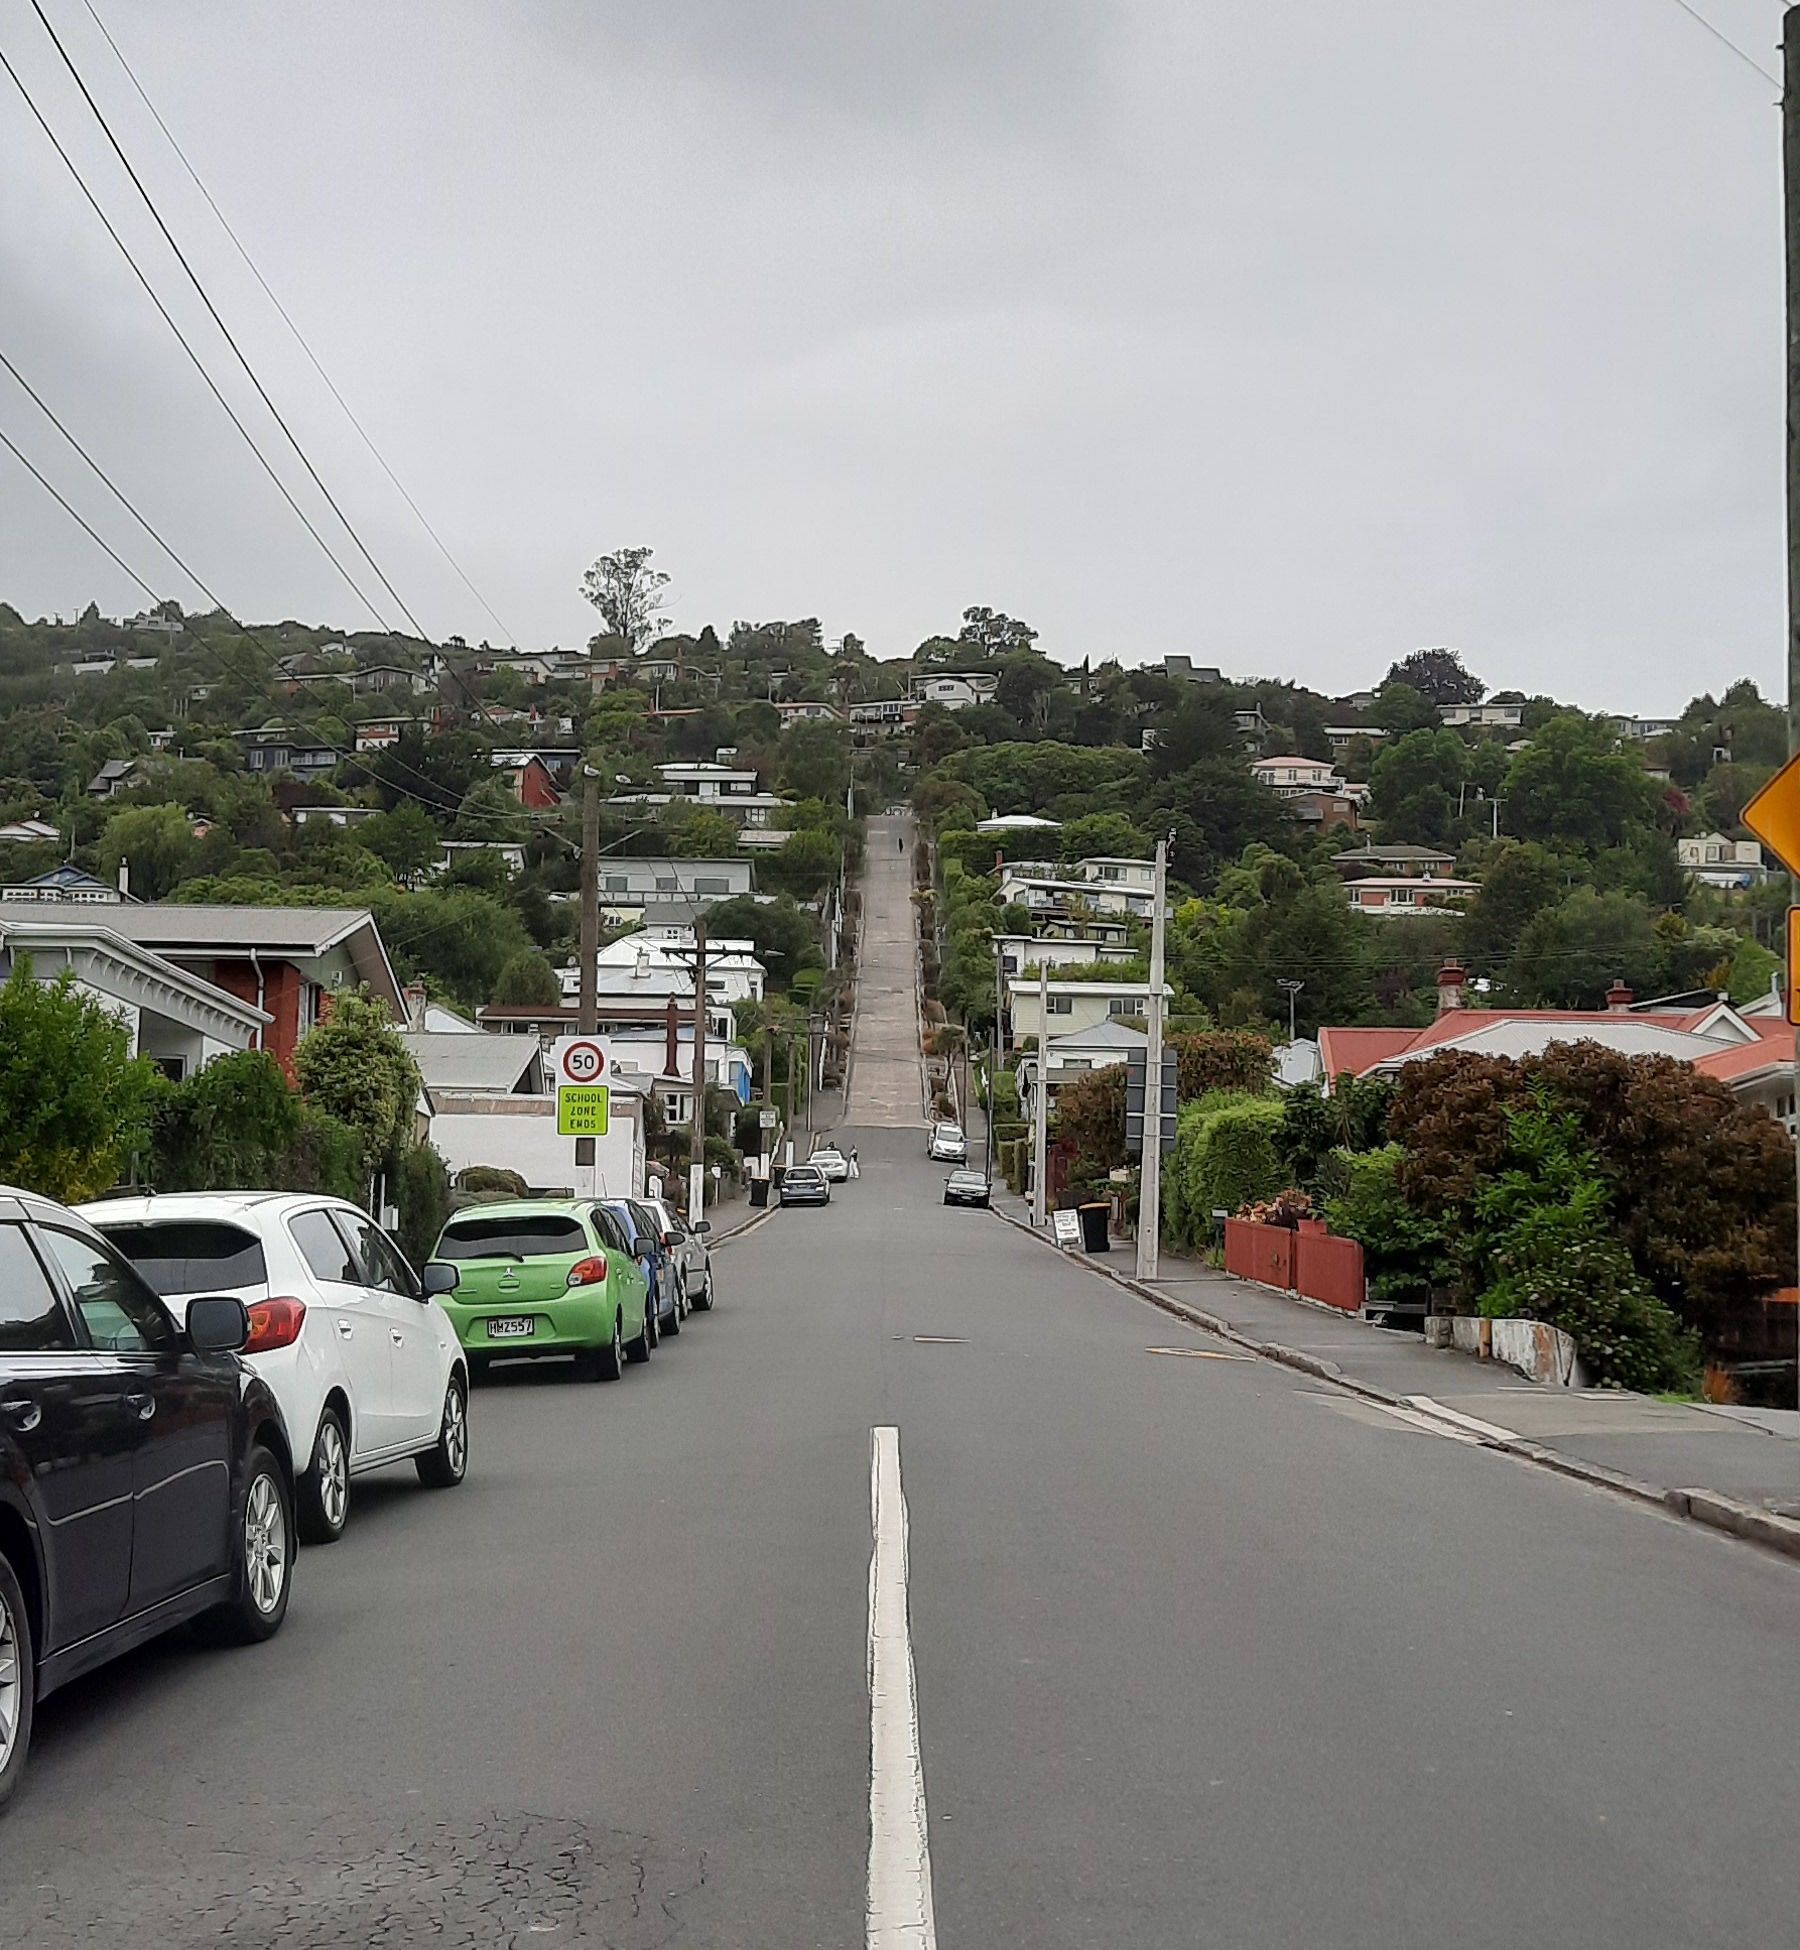 Baldwin St, the world's steepest street